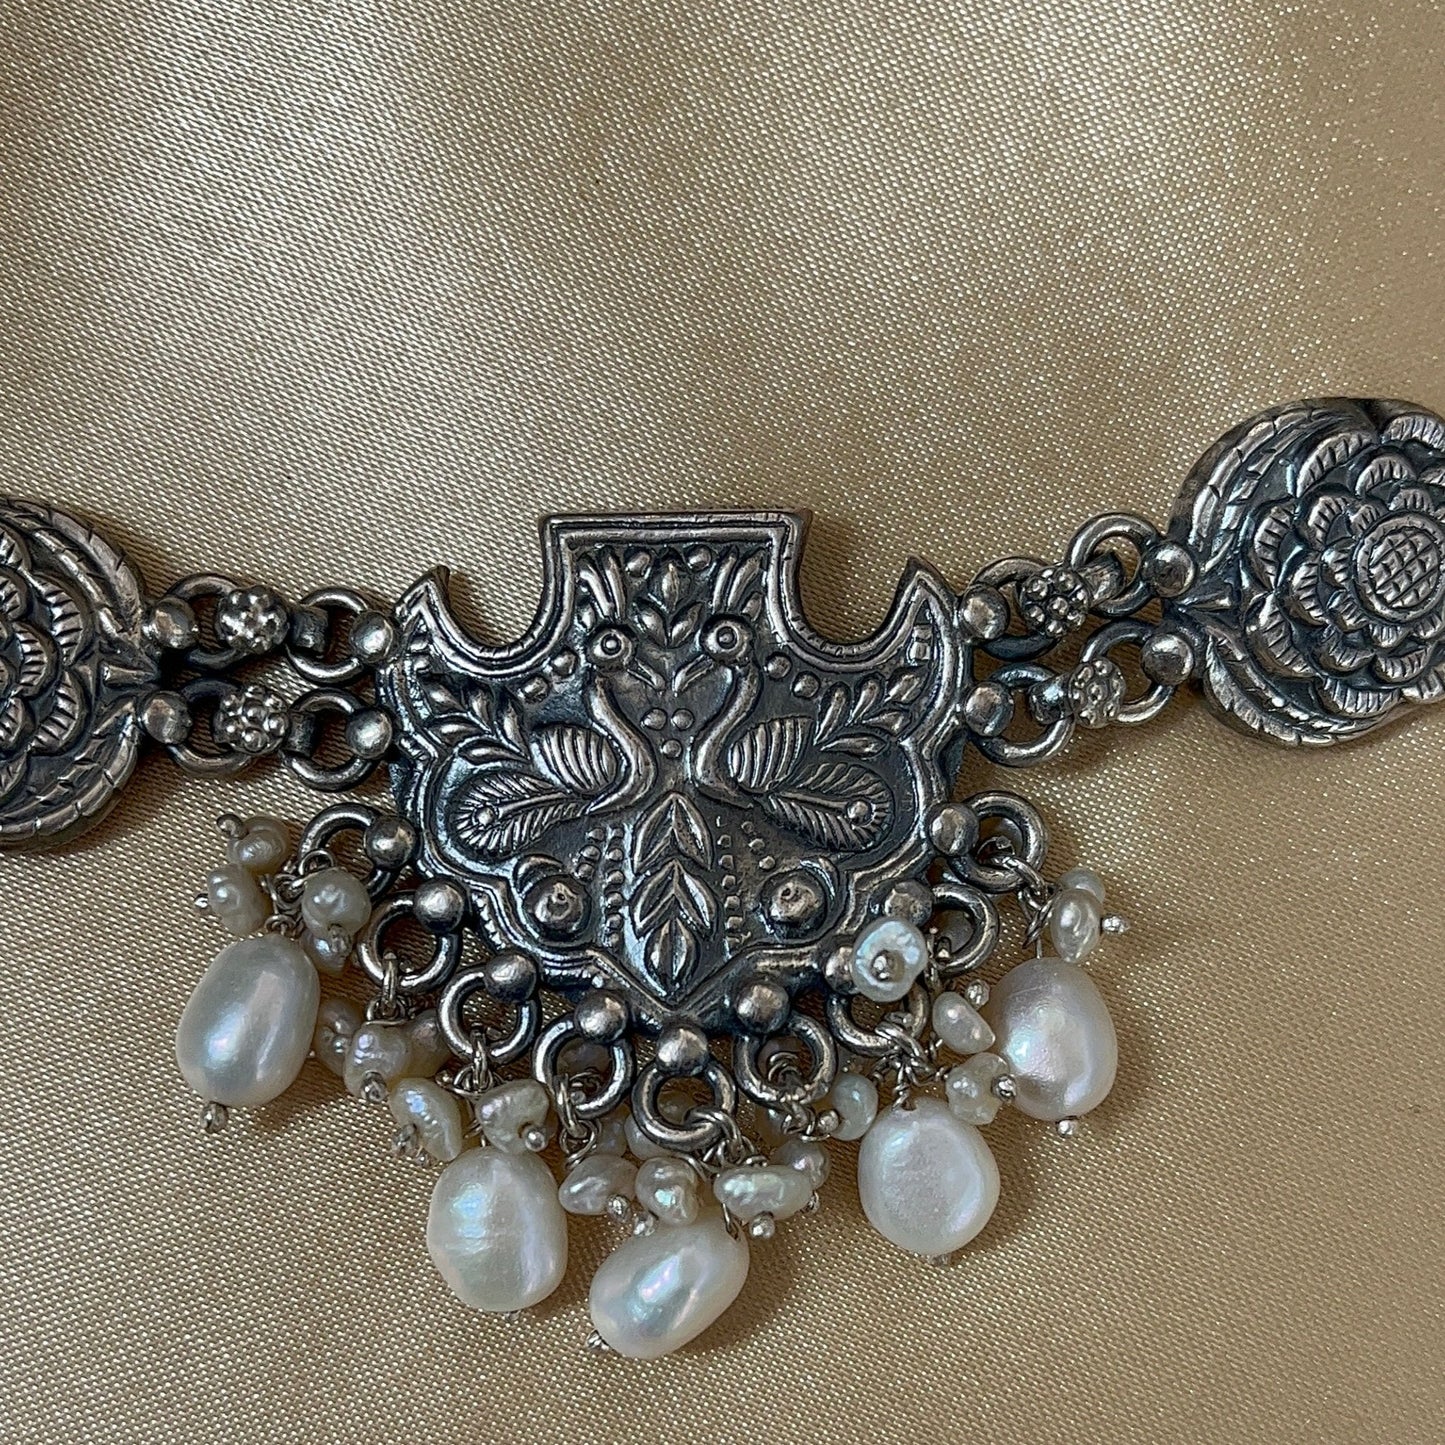 Silver CHokar necklace